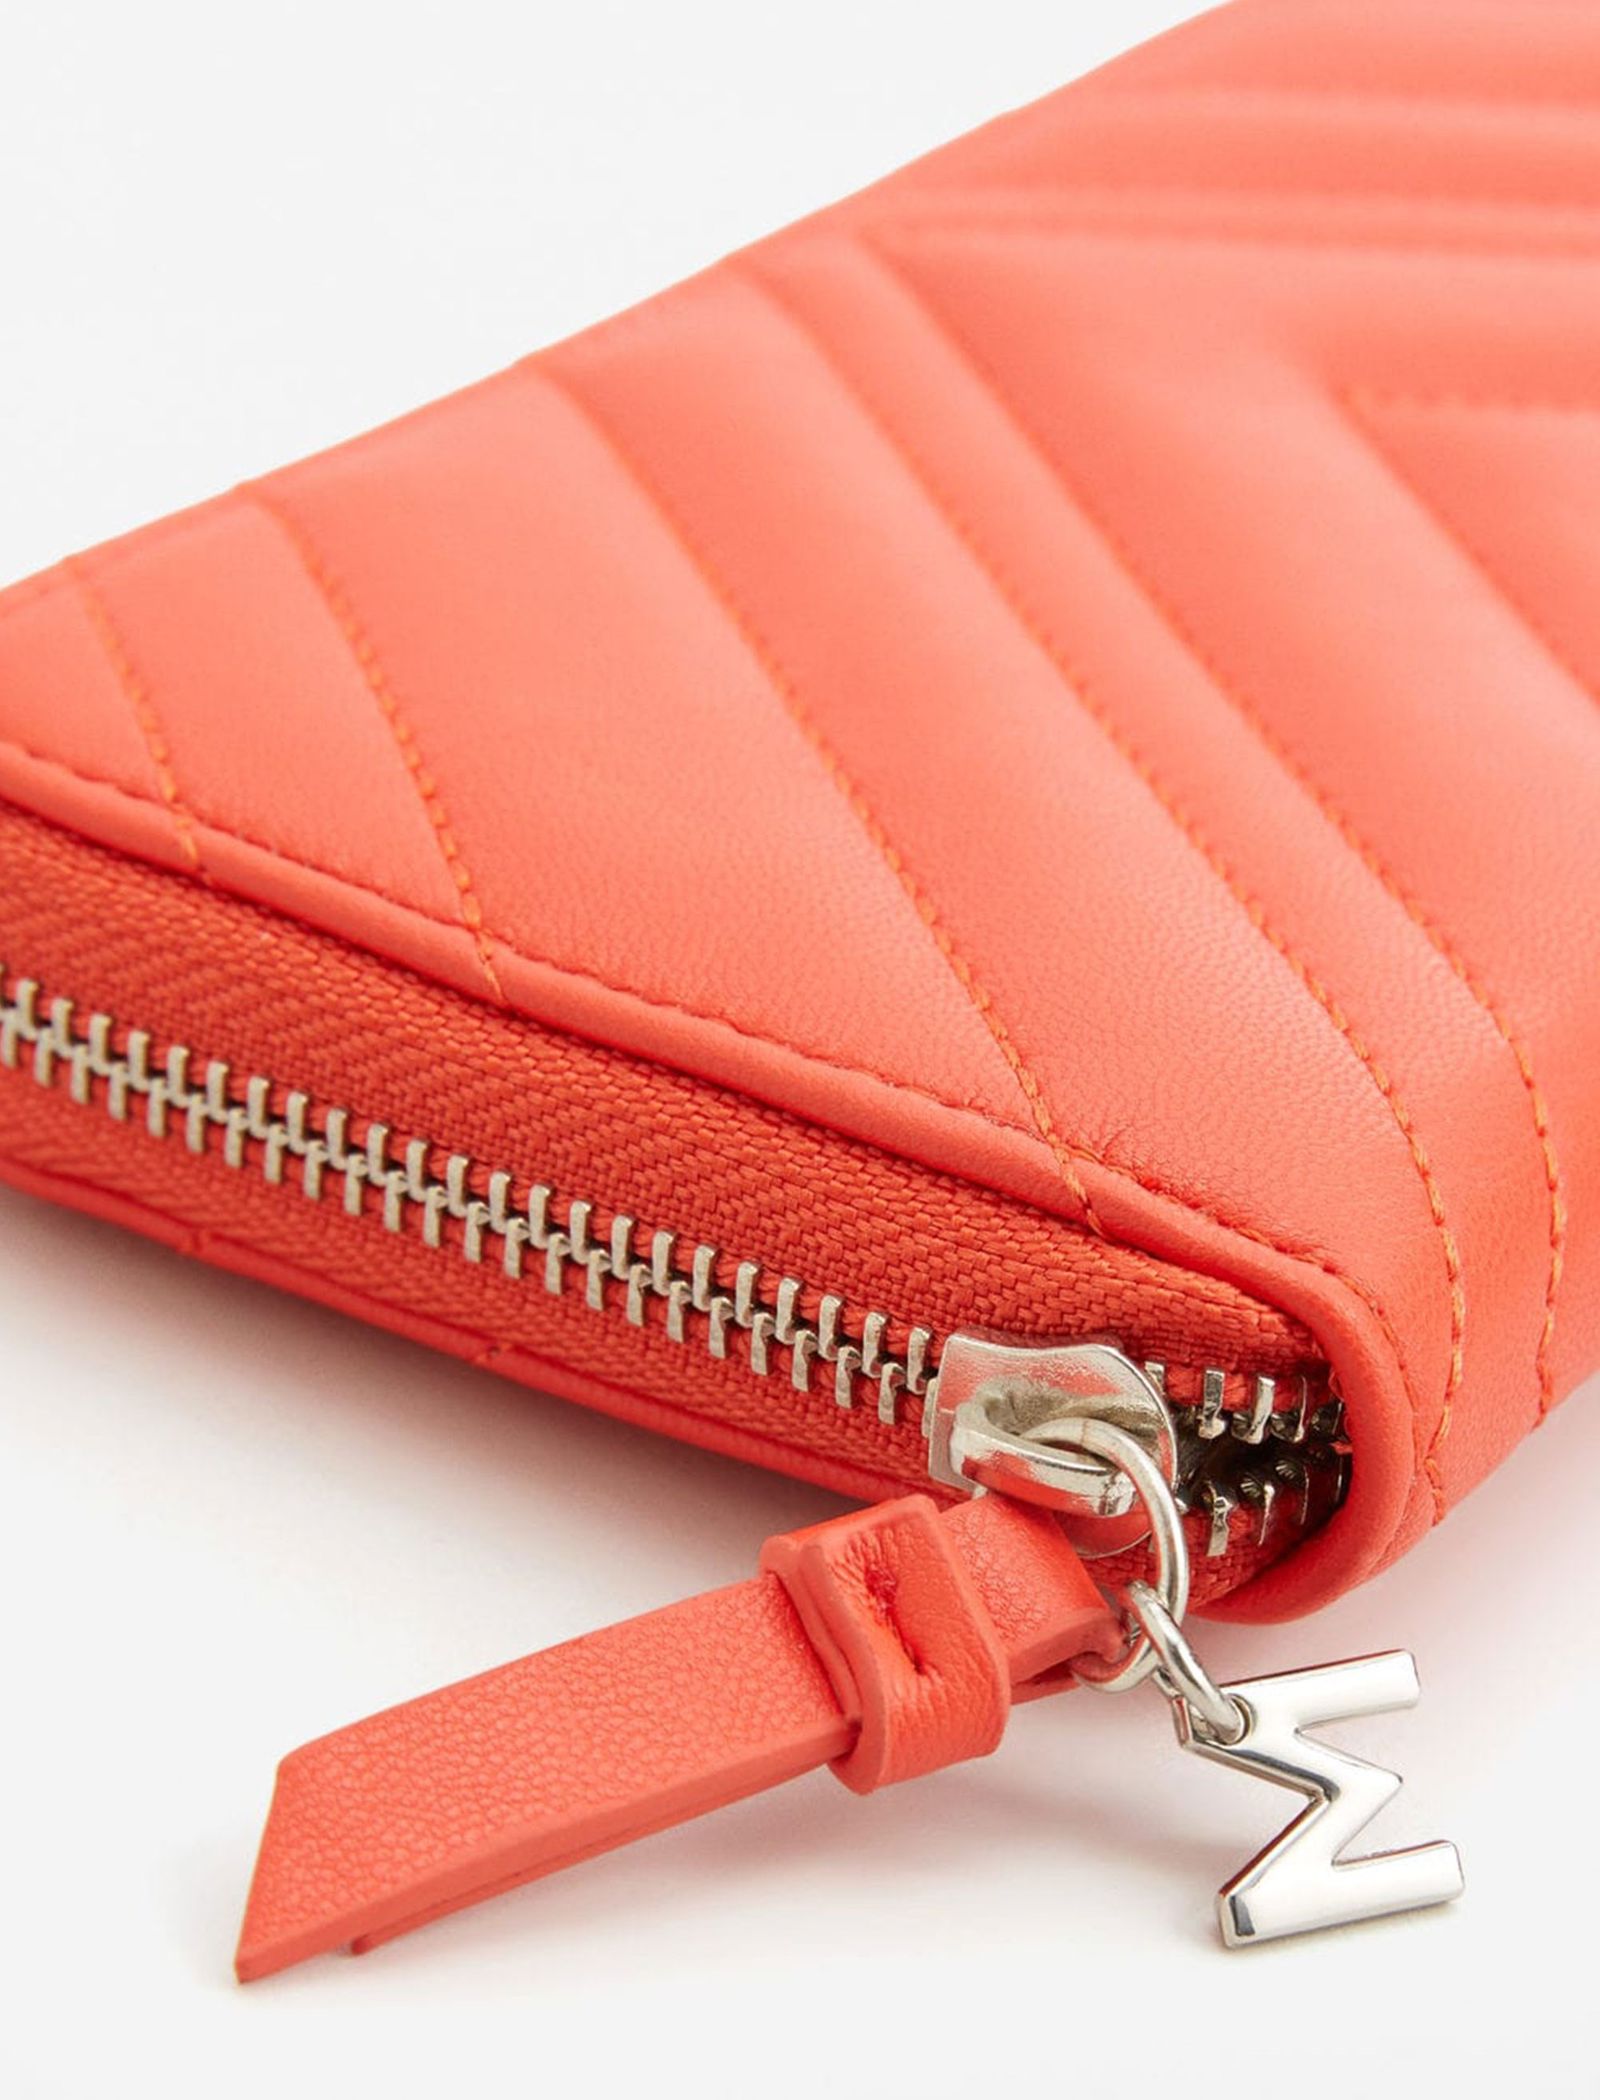 کیف پول زیپ دار زنانه - مانگو - قرمز نارنجي - 6